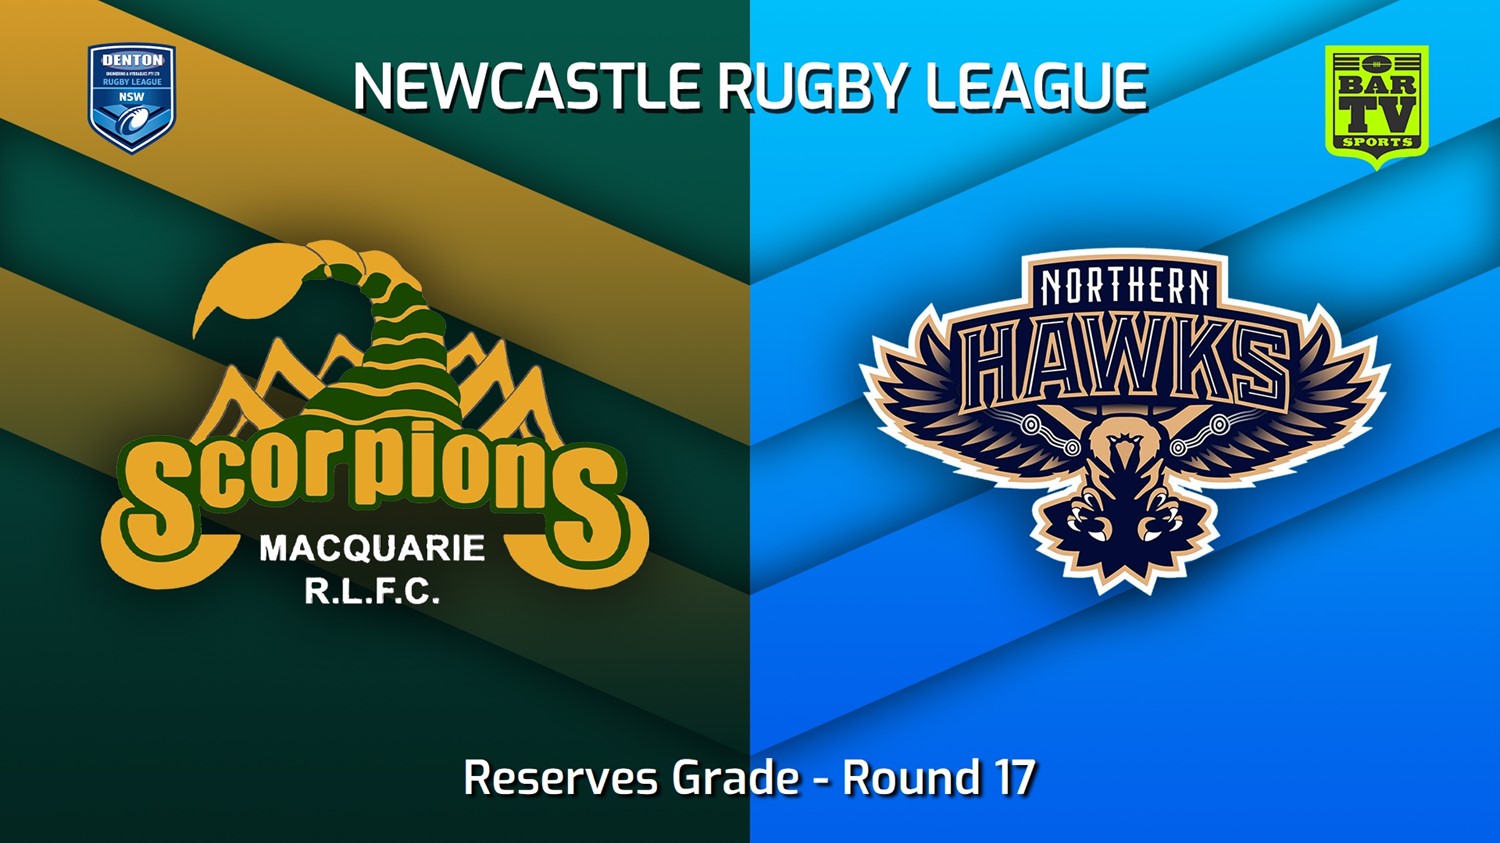 220730-Newcastle Round 17 - Reserves Grade - Macquarie Scorpions v Northern Hawks Slate Image